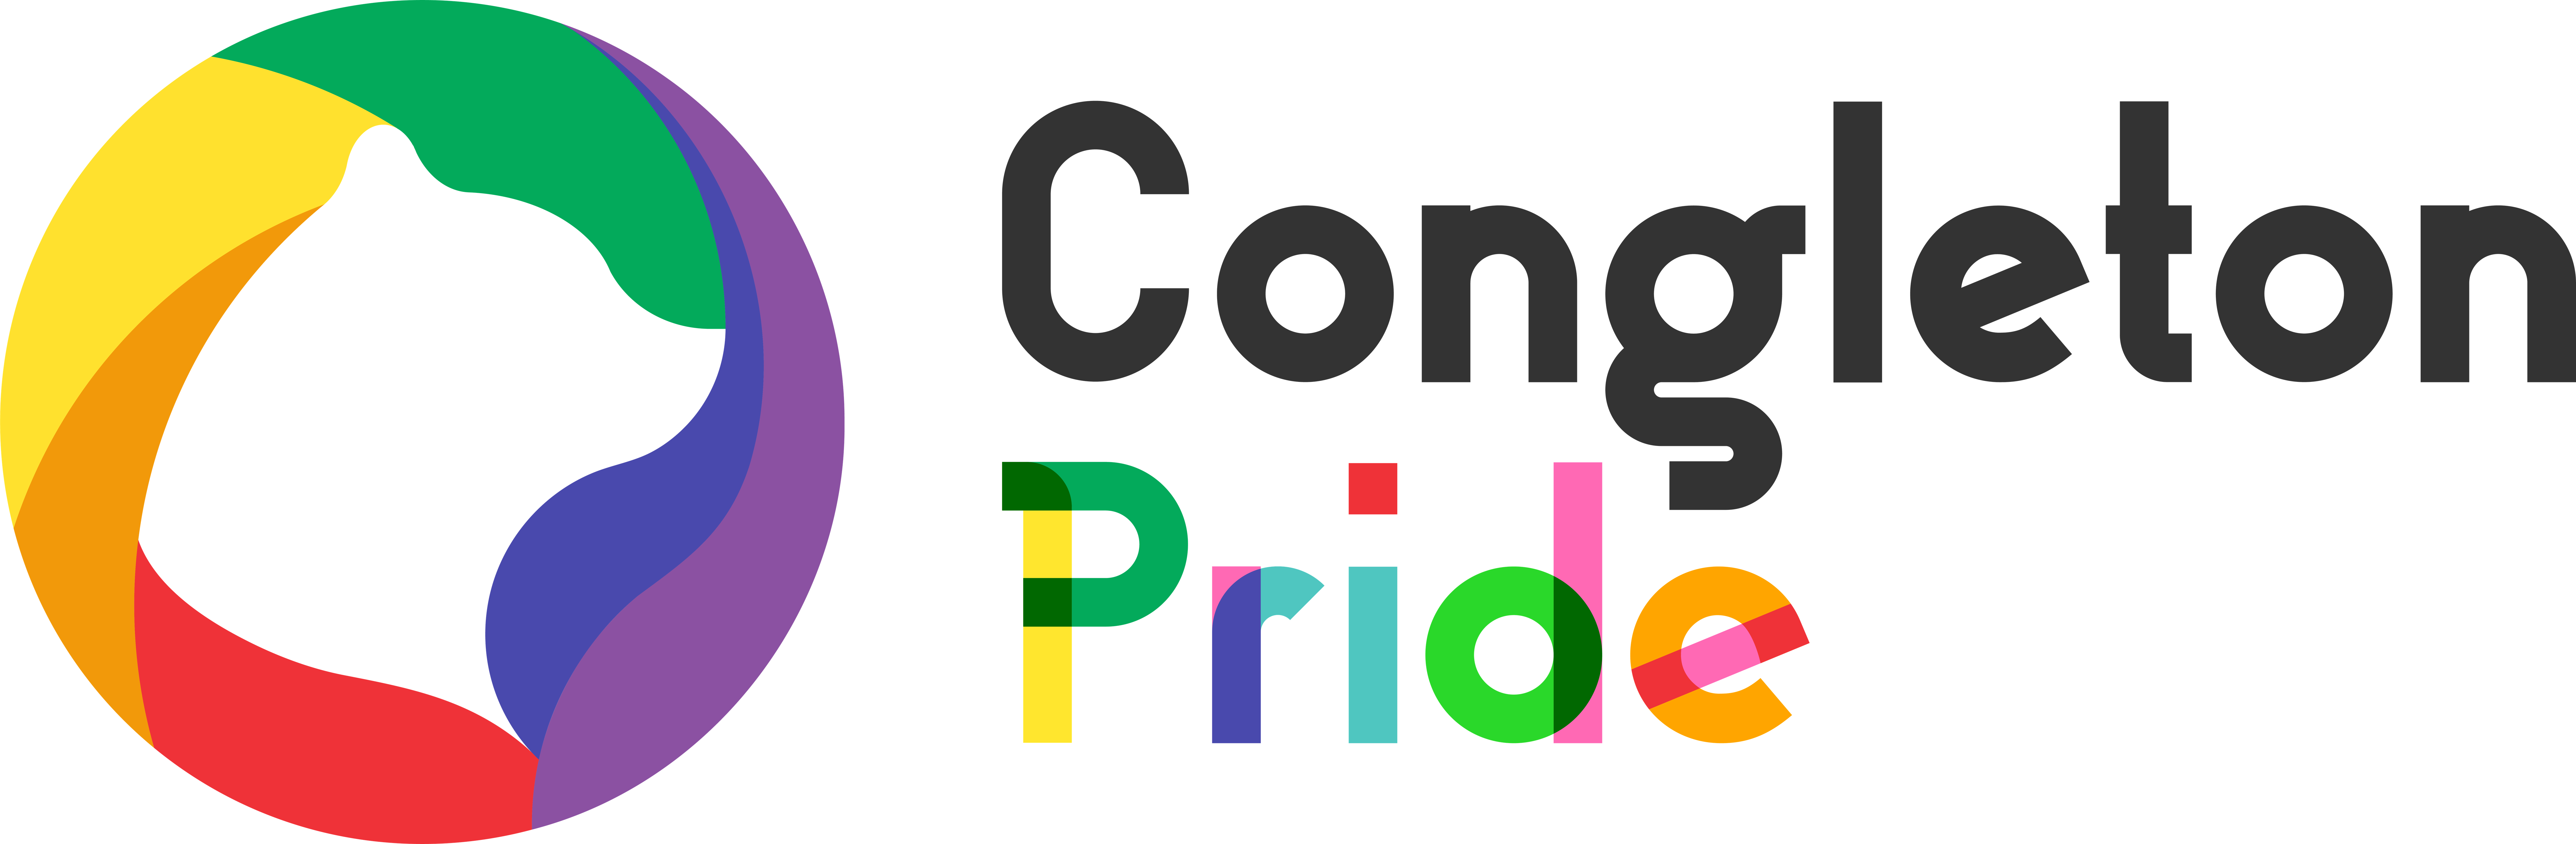 Congleton Pride, 2-line logo for light background